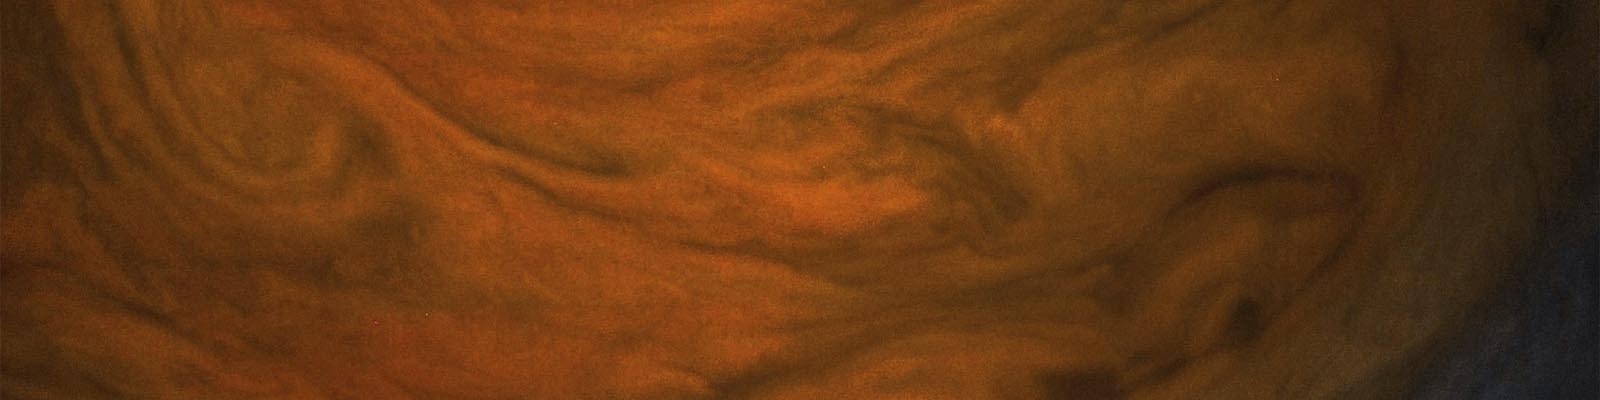 Gros plan sur la Grande Tache Rouge de Jupiter par la sonde Juno